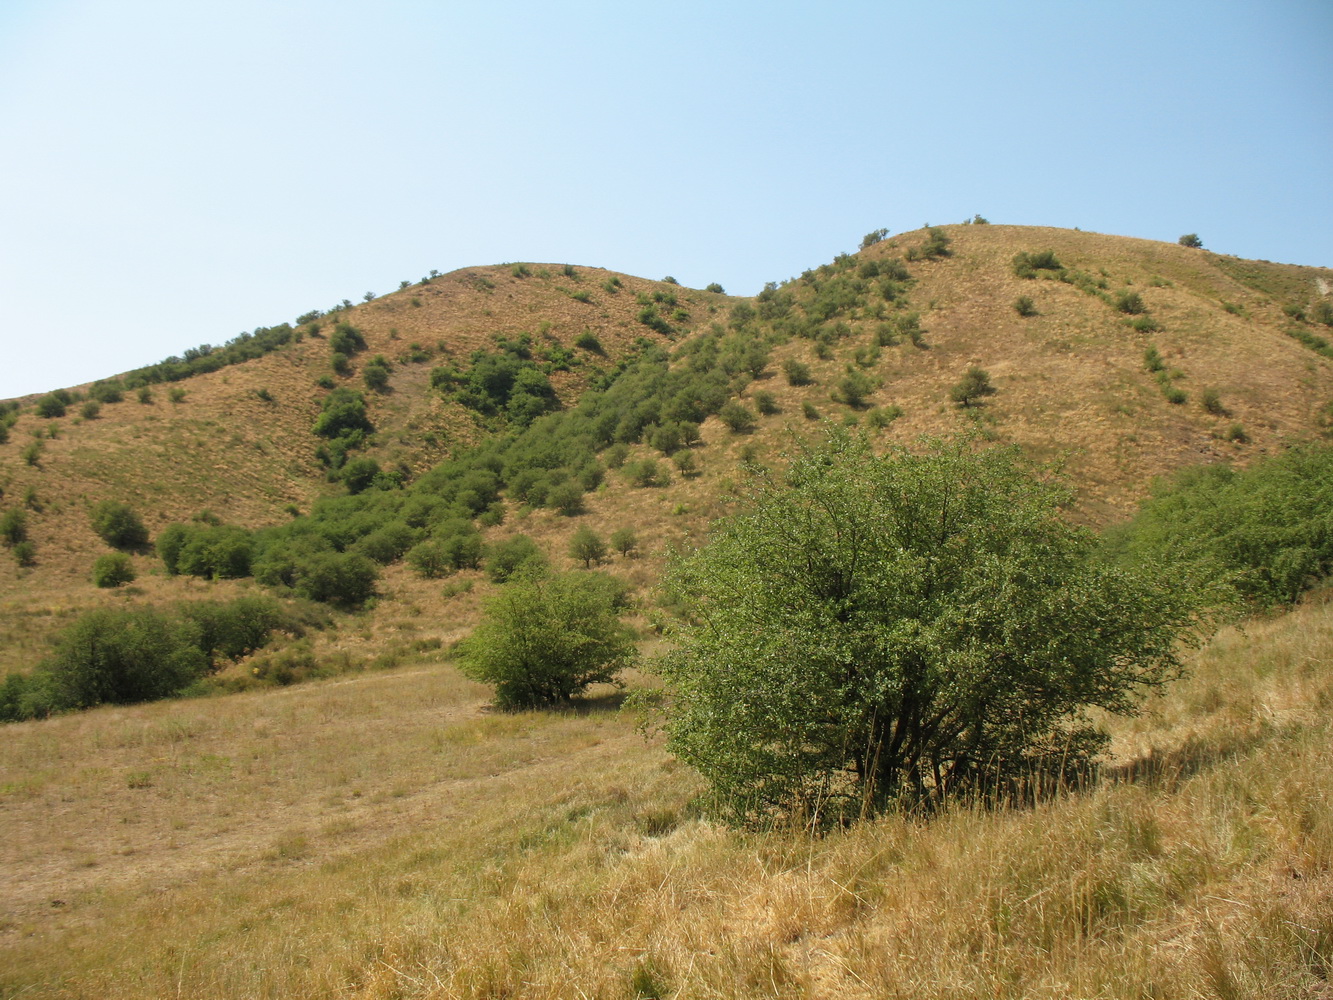 Уркумбайсай, image of landscape/habitat.